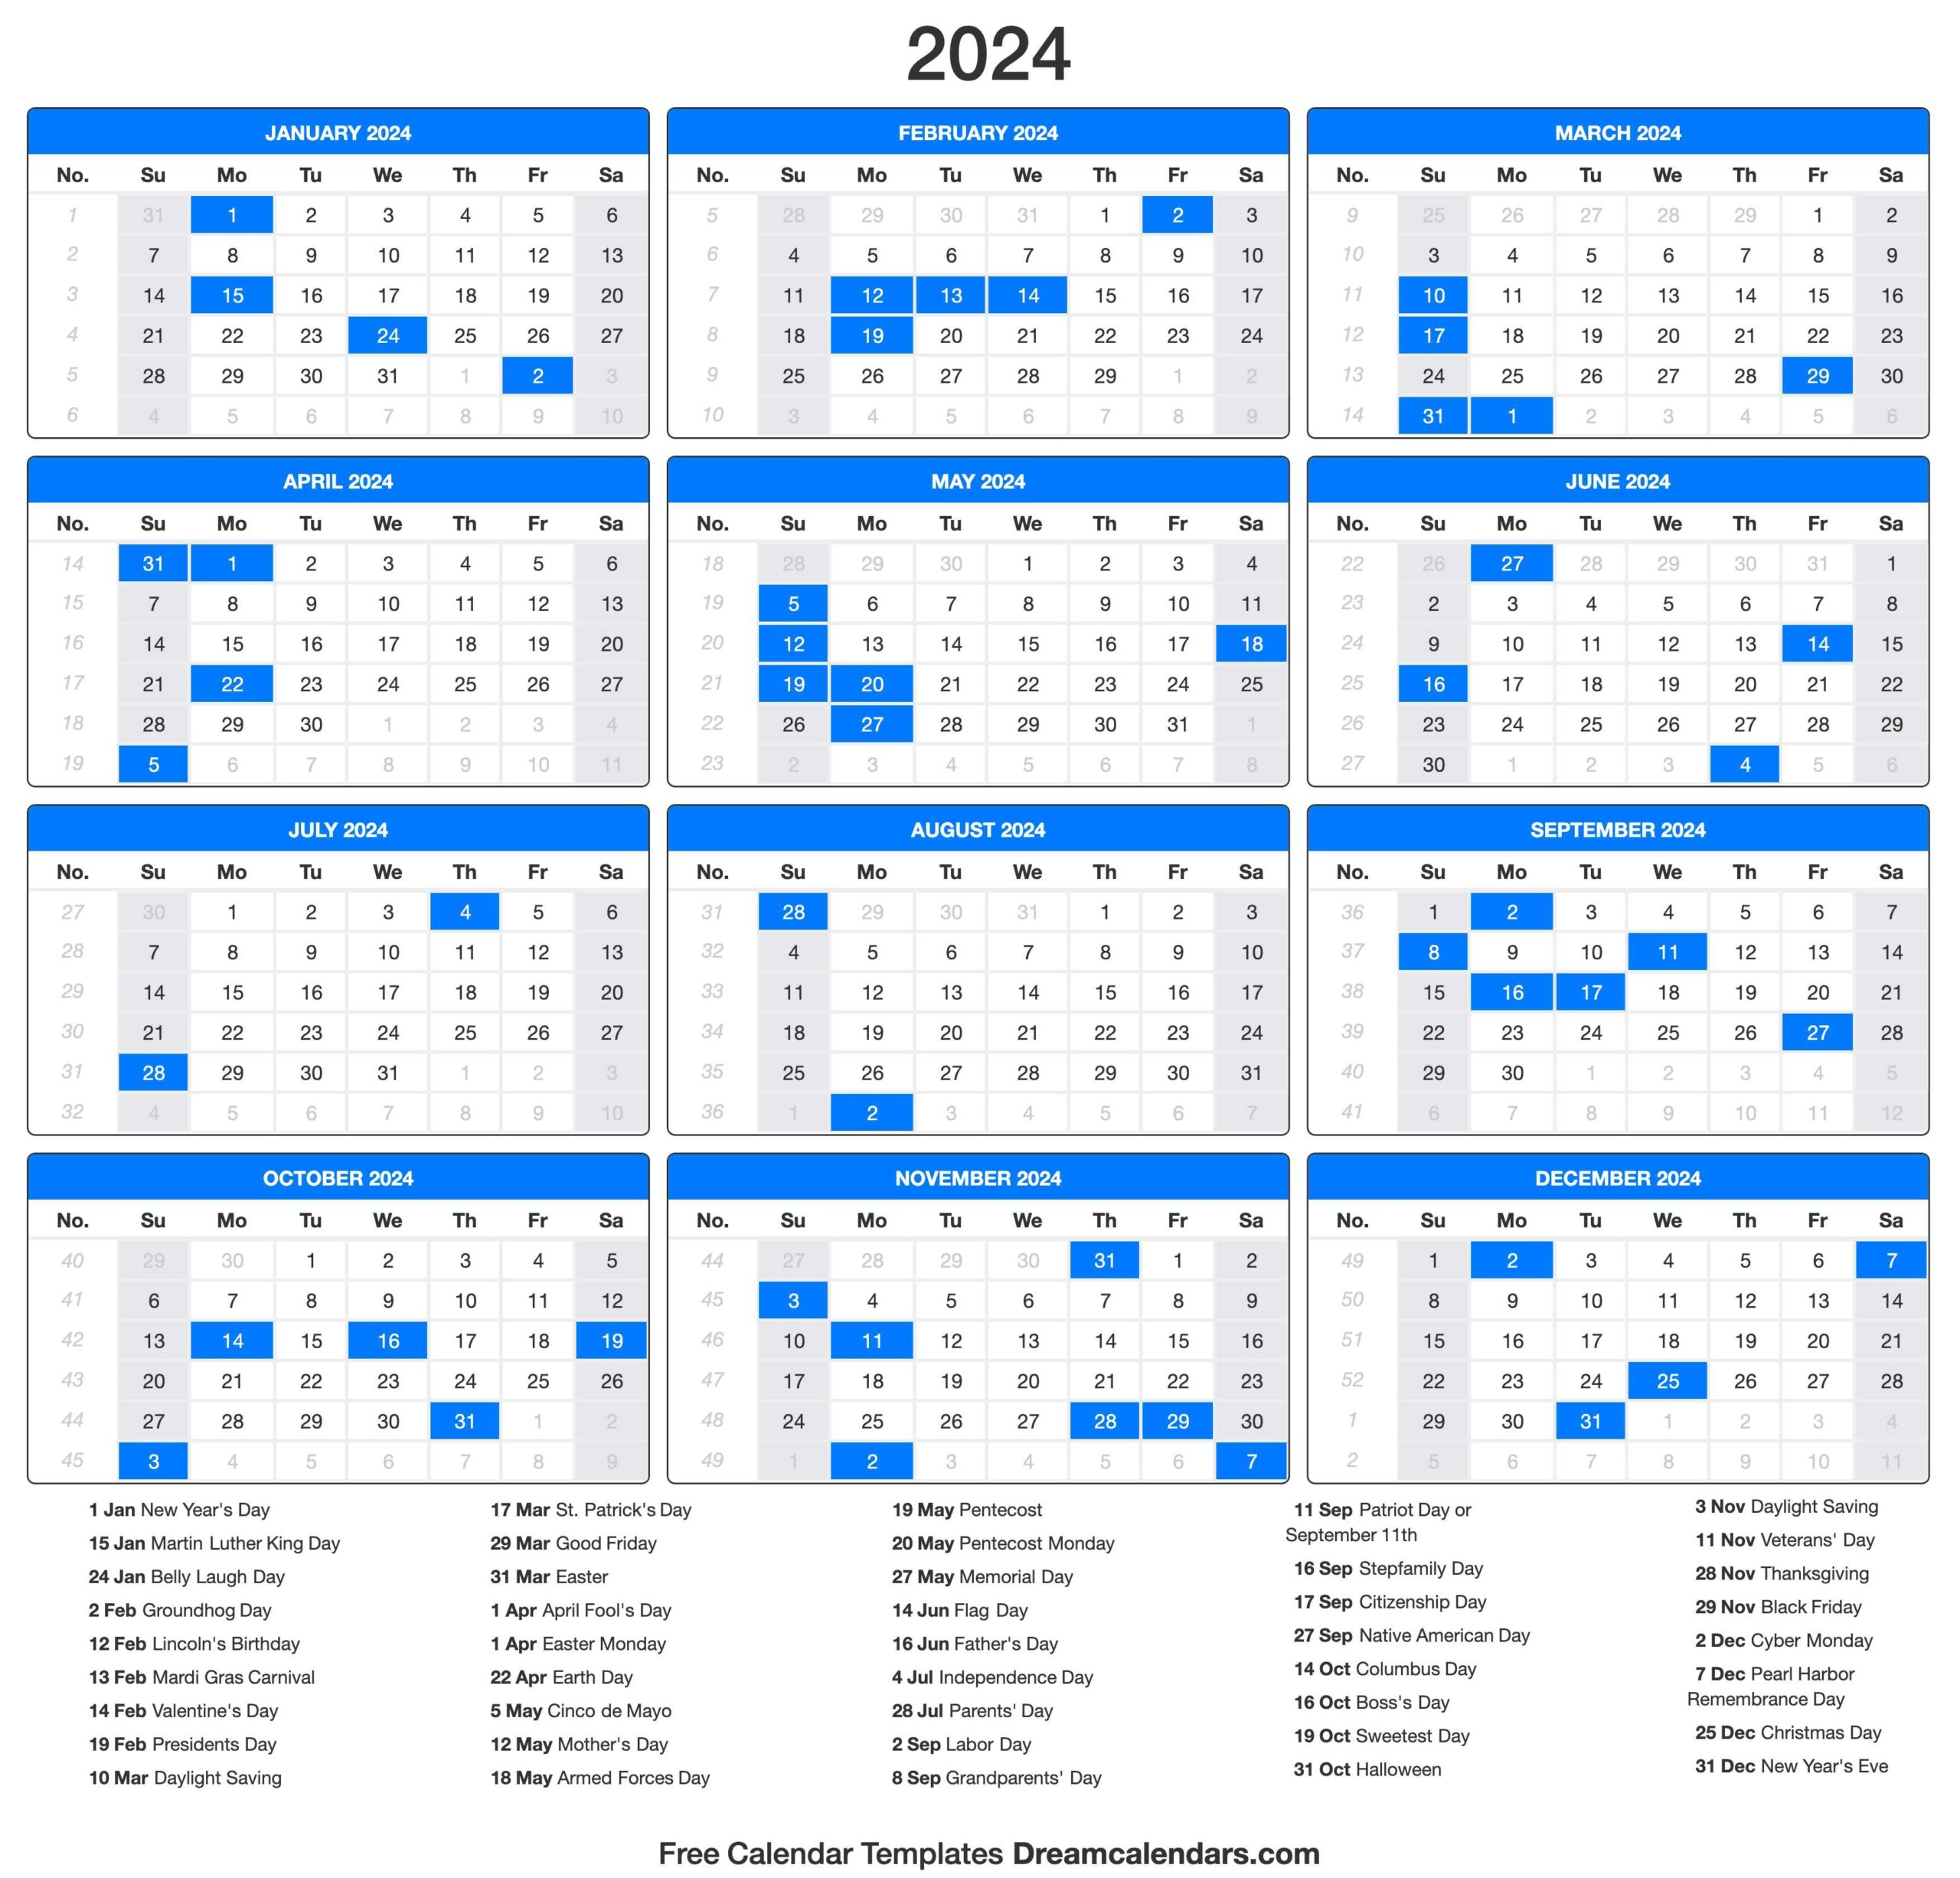 2024 Calendar - Free Printable 2024 Entire Yearly Calendar